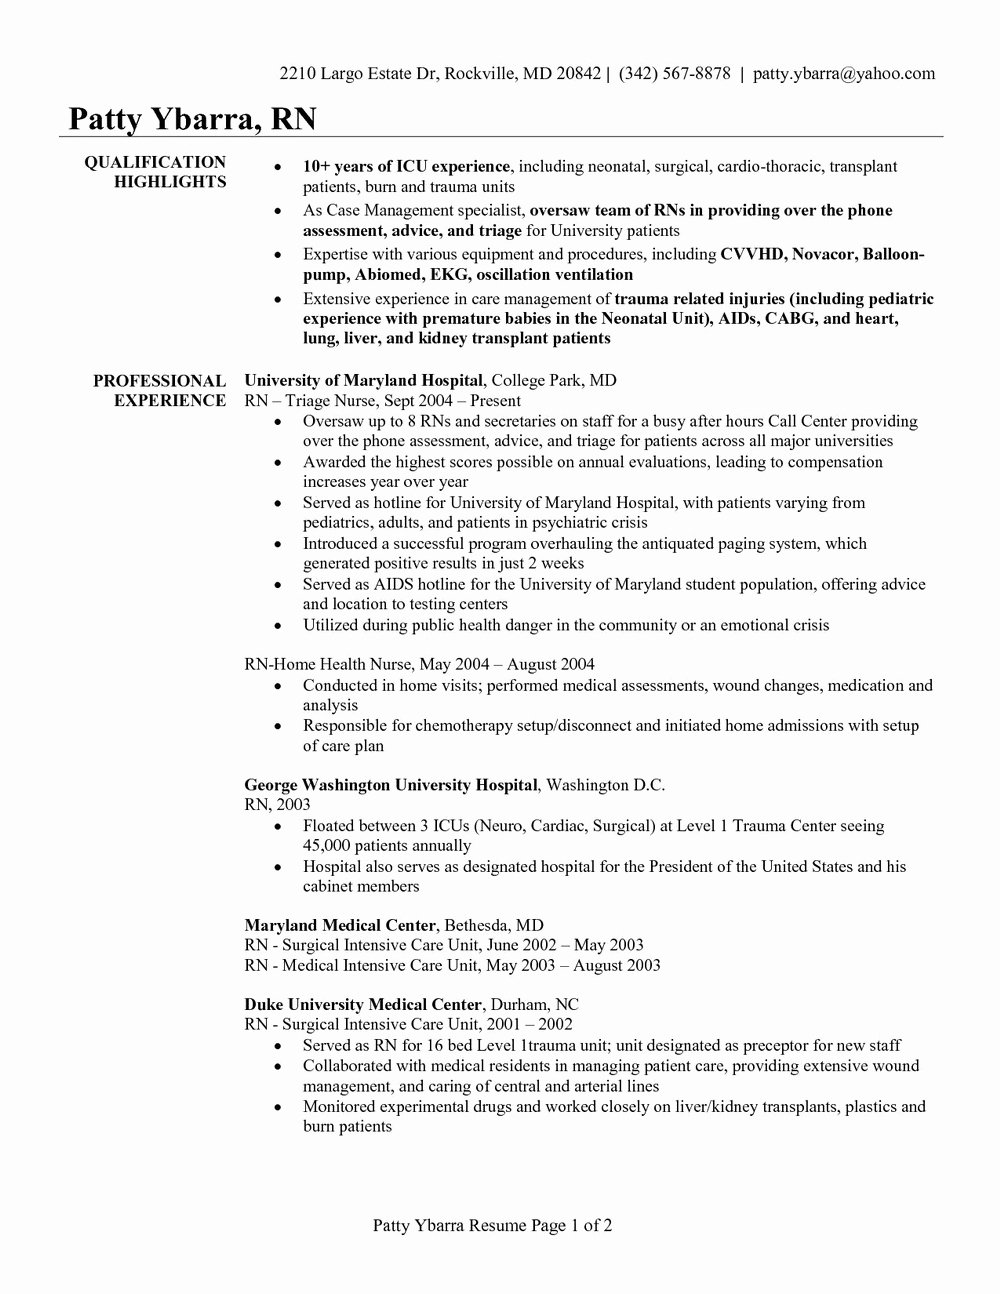 Registered Nurse Resume Templates Resumes 343